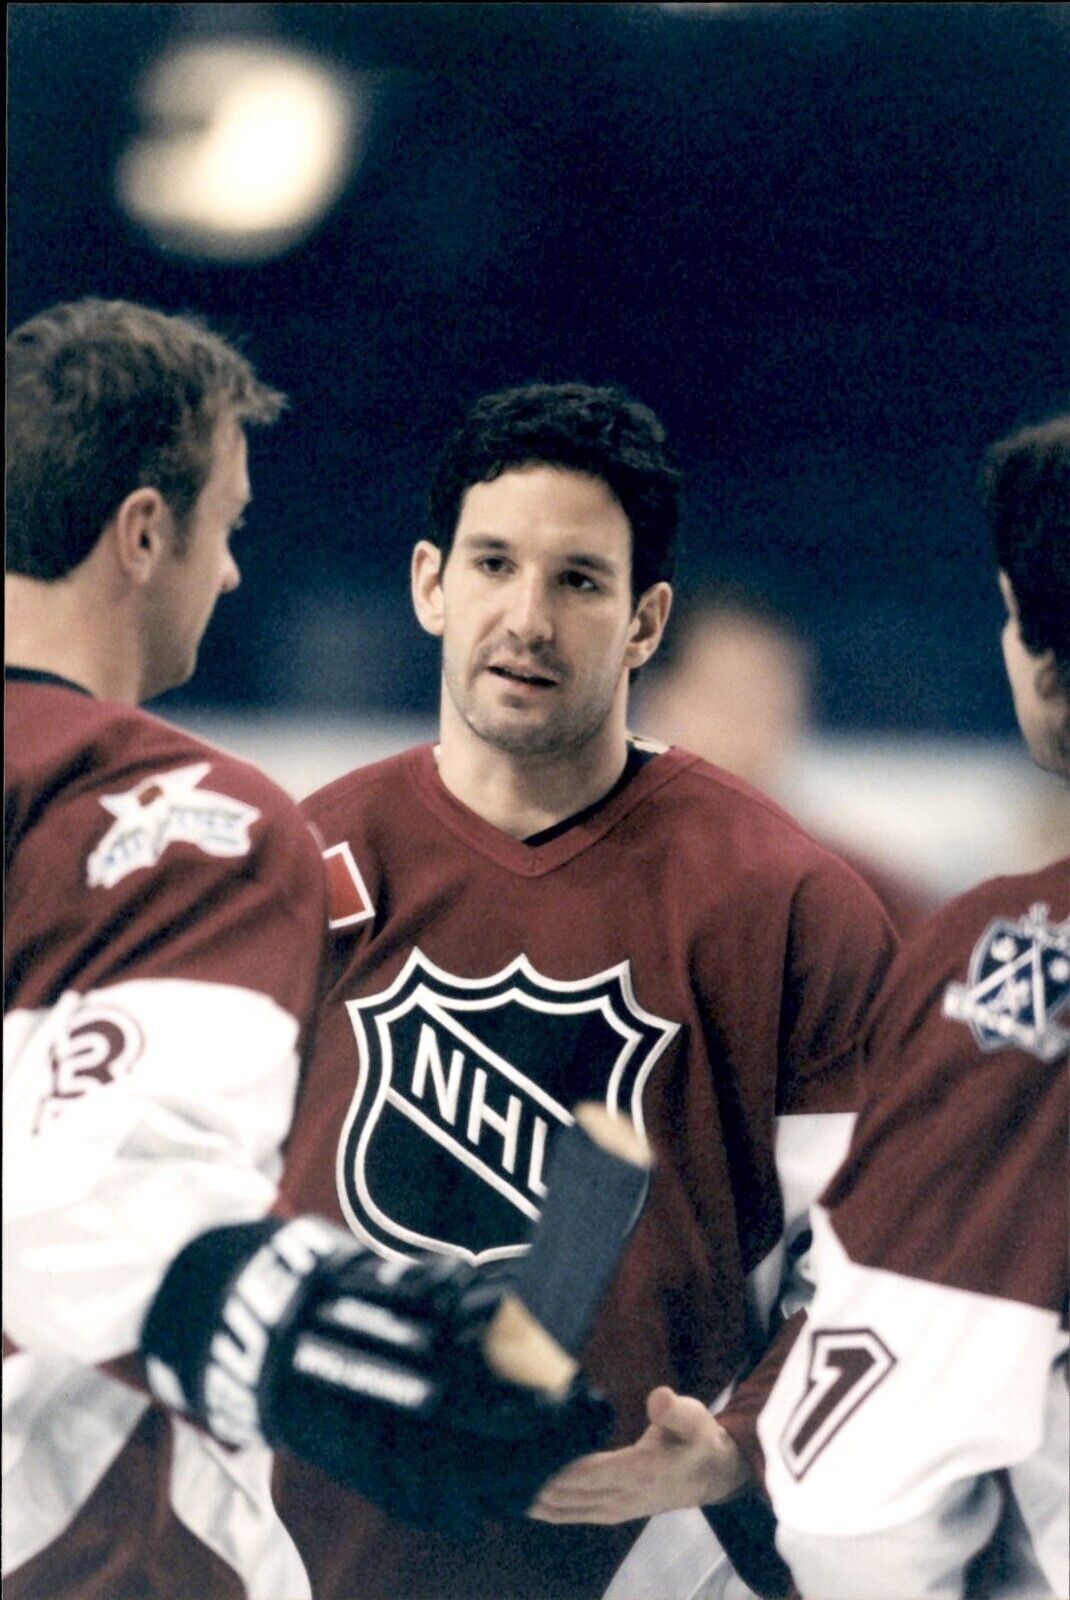 PF32 1999 Orig Photo BRENDAN SHANAHAN DETROIT RED WINGS NHL HOCKEY ALL-STAR GAME